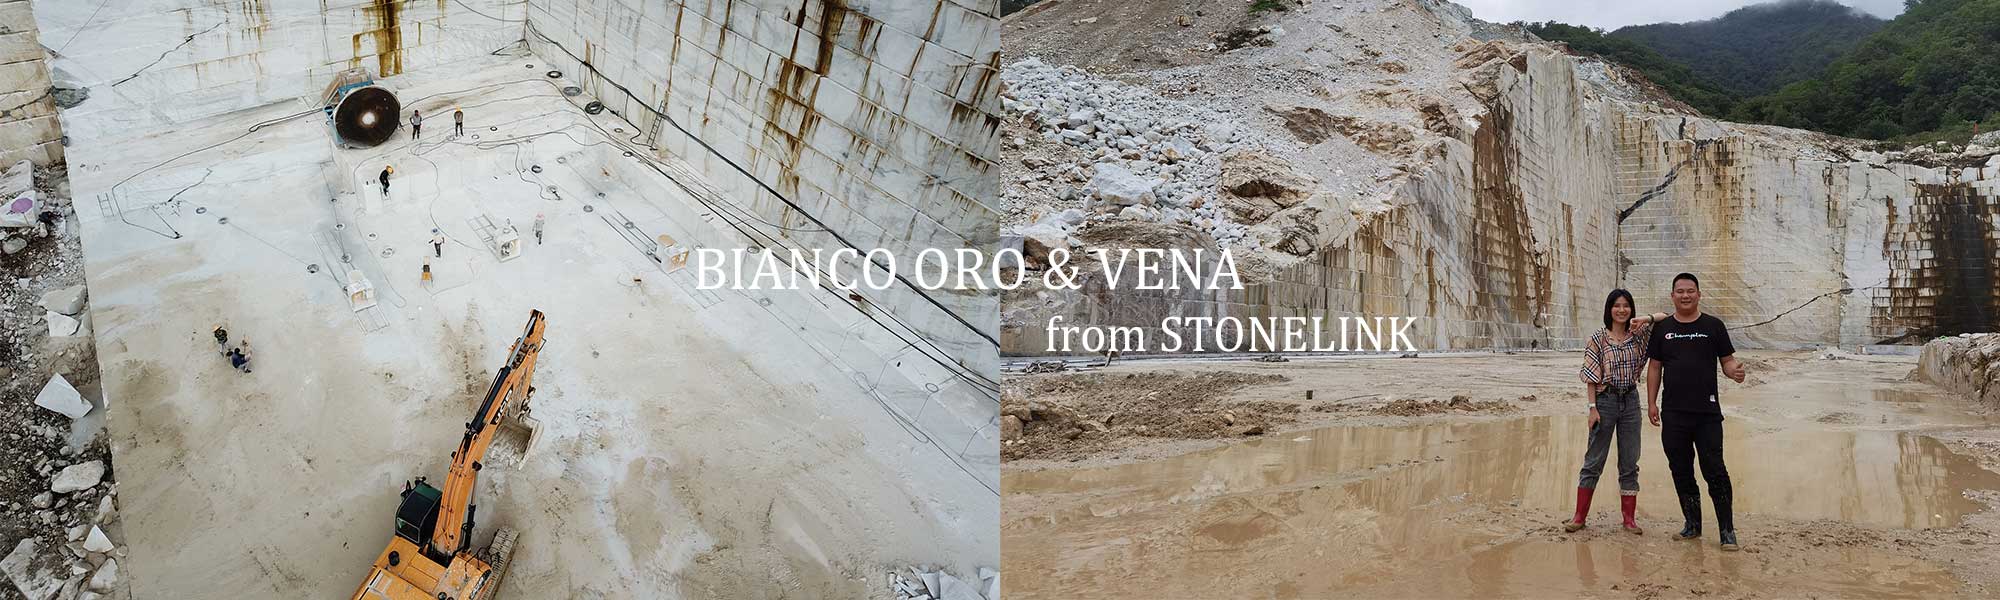 Bianco oro & vena quarry